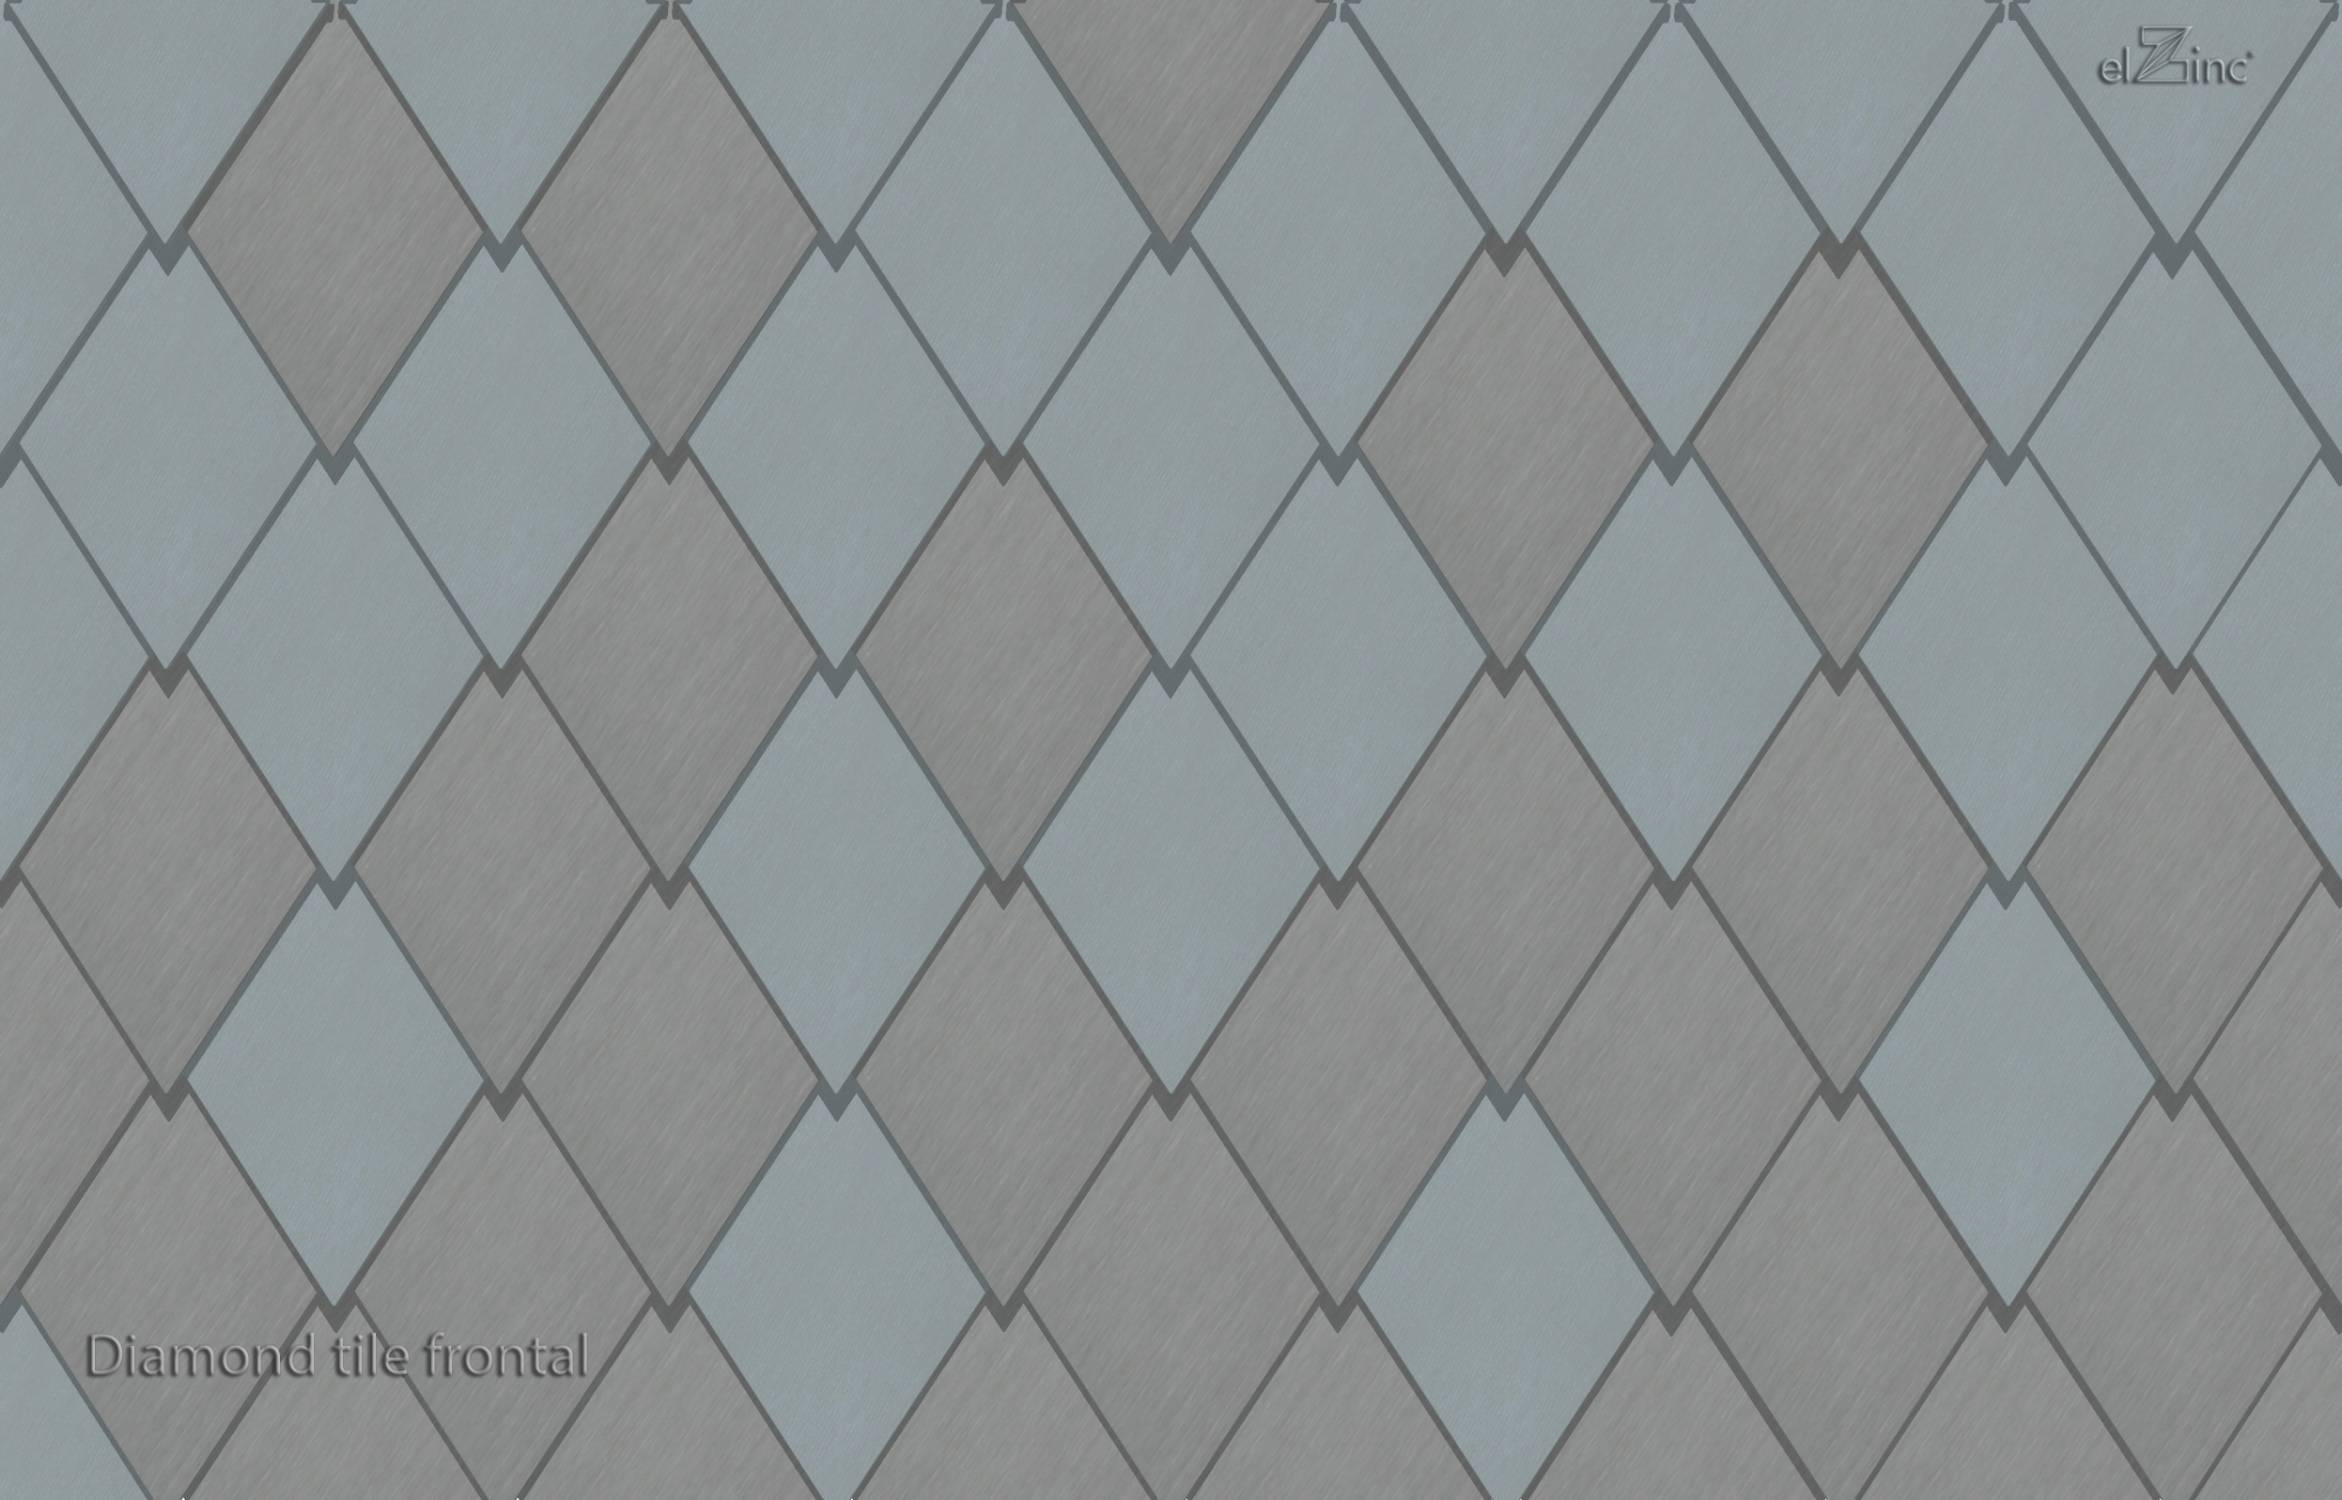 elZinc Diamond Tile Cladding - Zinc Roofing and Wall Cladding